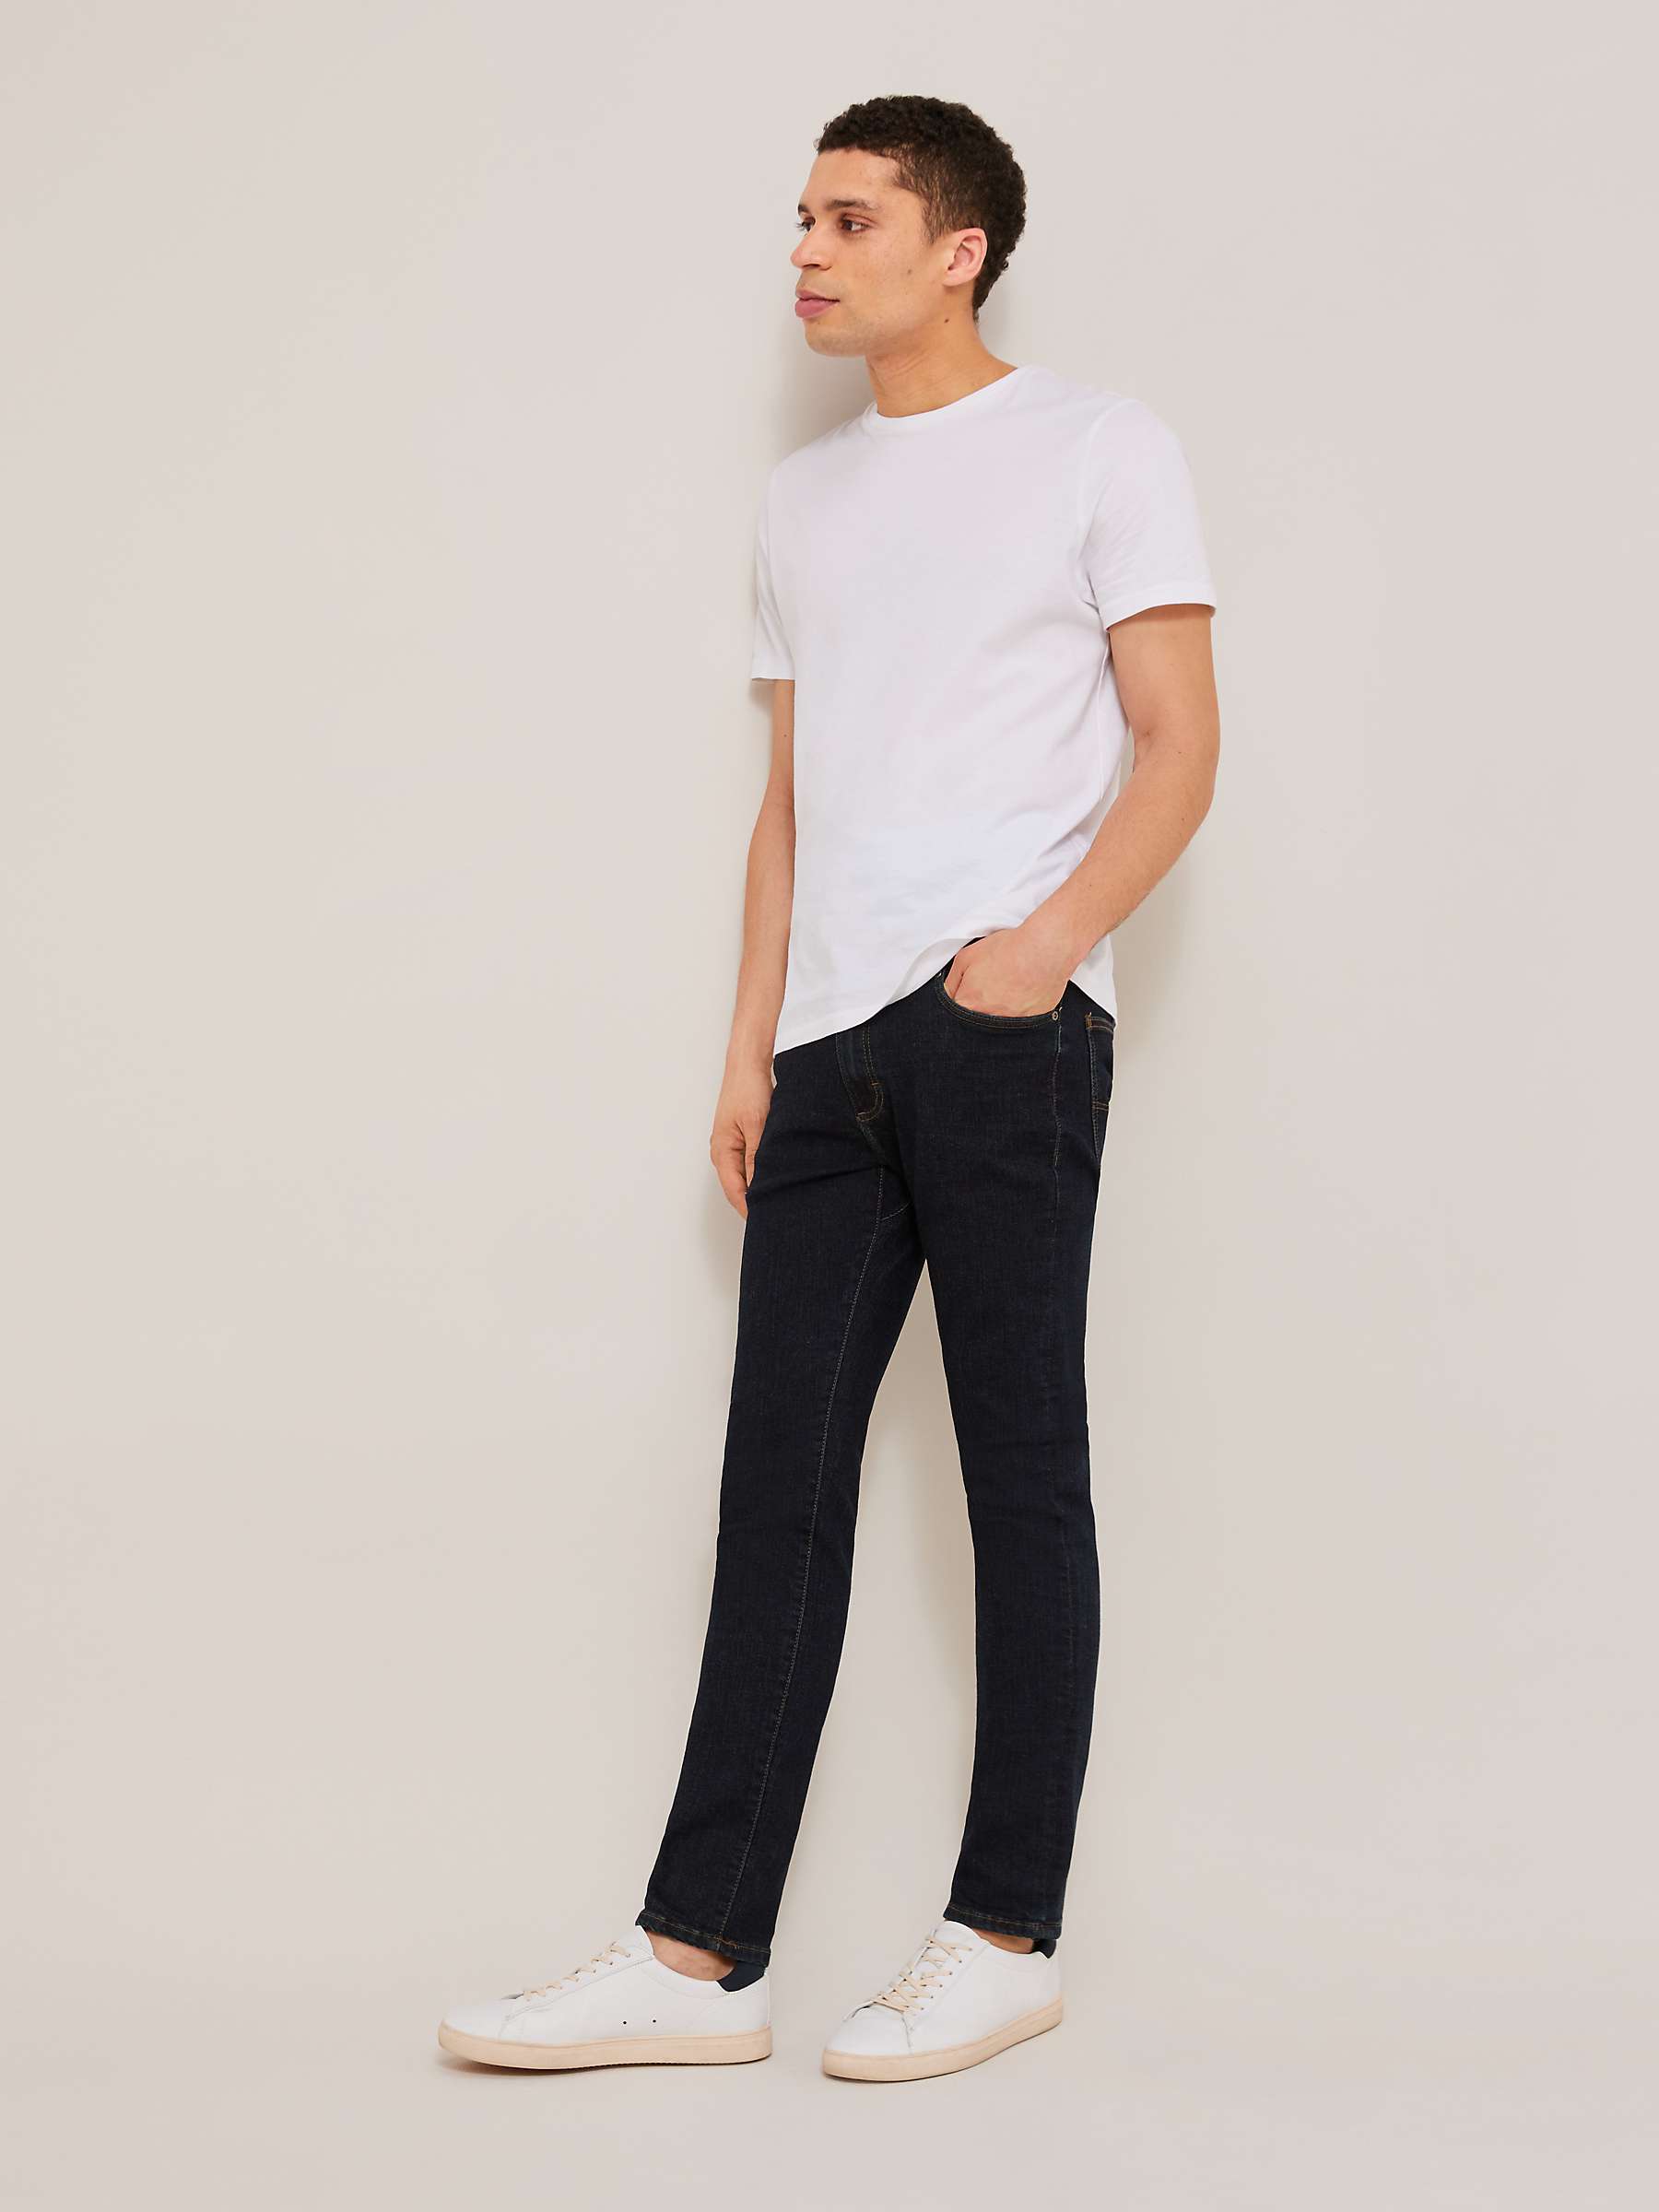 Buy Lee Wanderer Slim Jeans, Navy Online at johnlewis.com